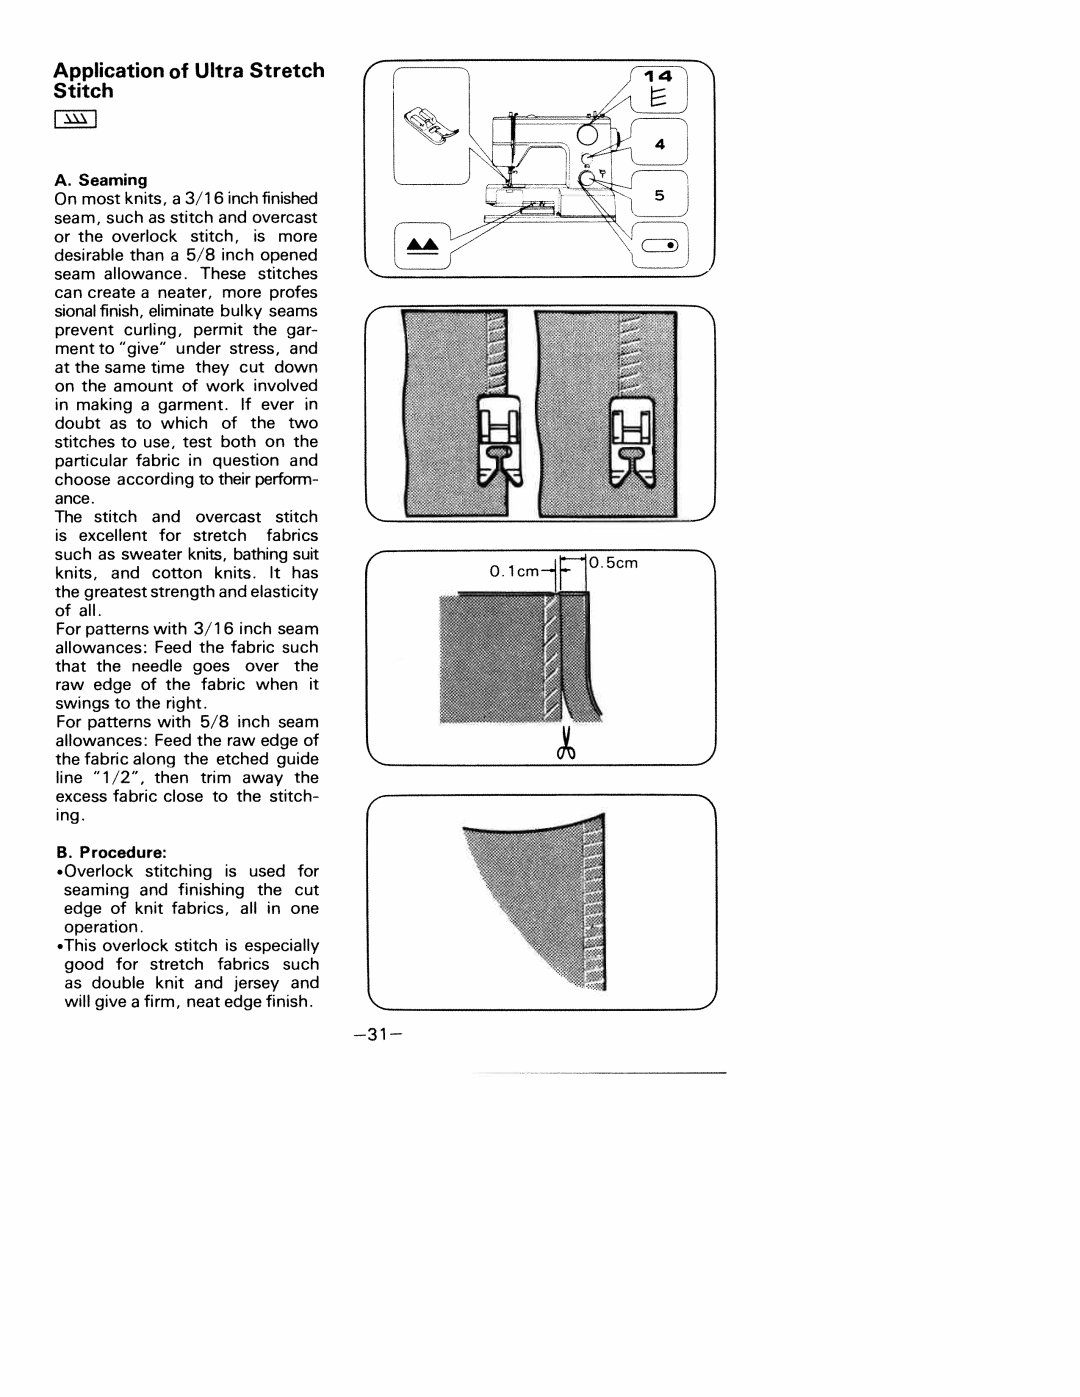 White 1927 manual Stitch, Application of Ultra Stretch 